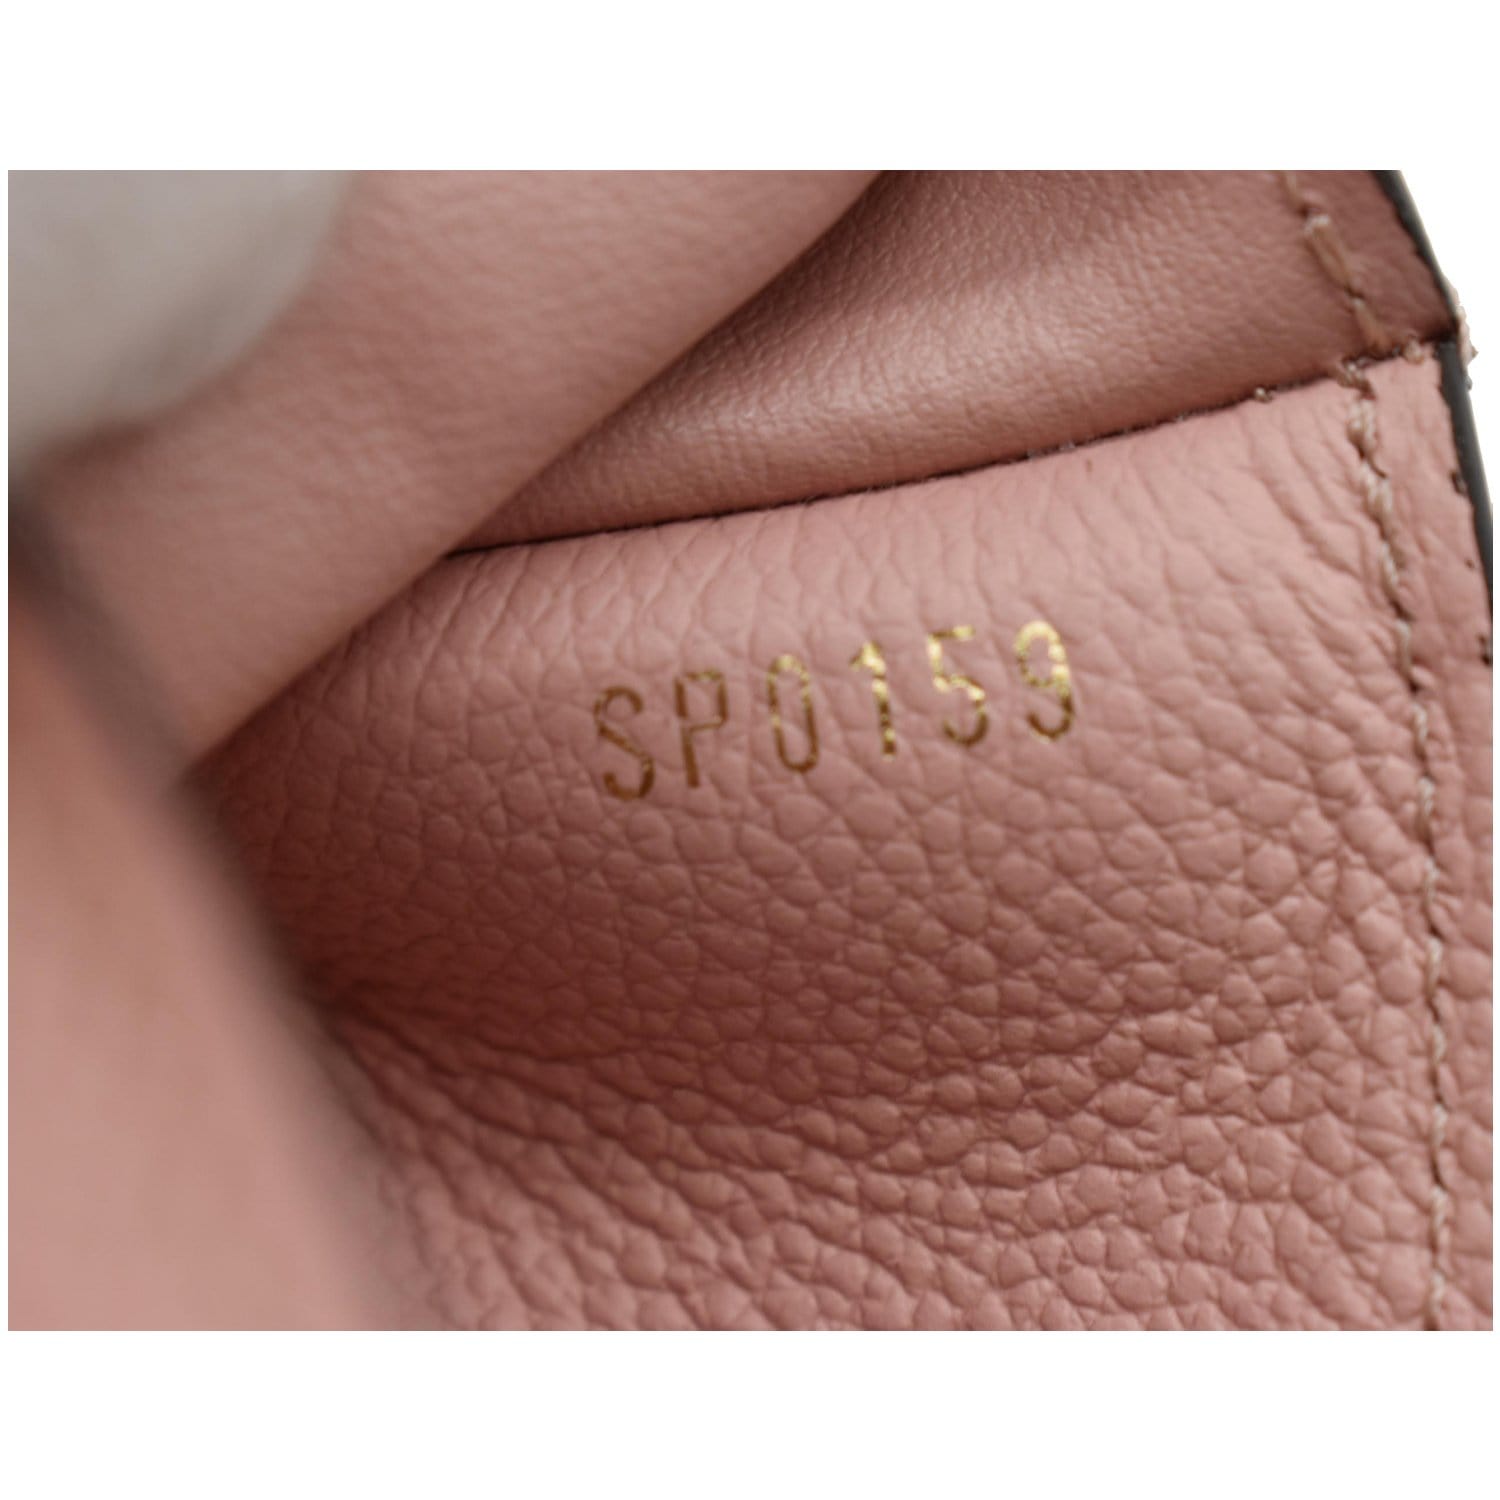 Louis Vuitton Monogram Empreinte Zoe Wallet